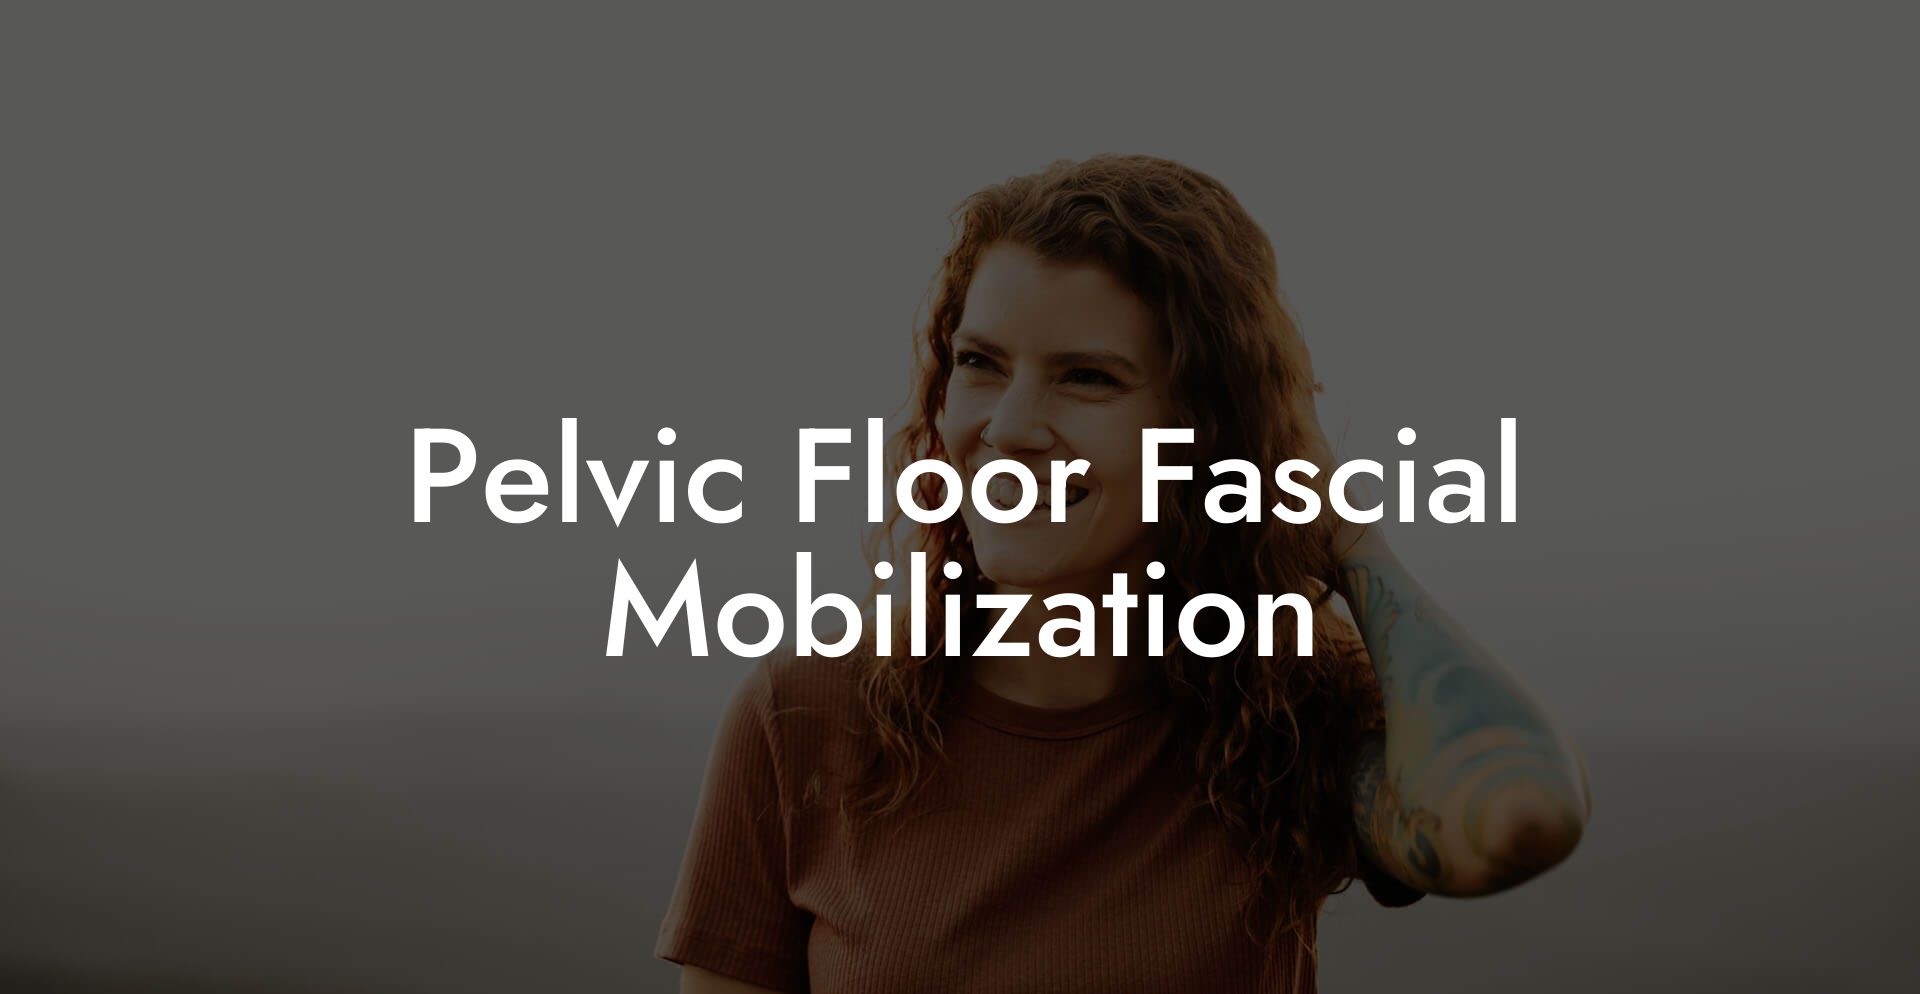 Pelvic Floor Fascial Mobilization